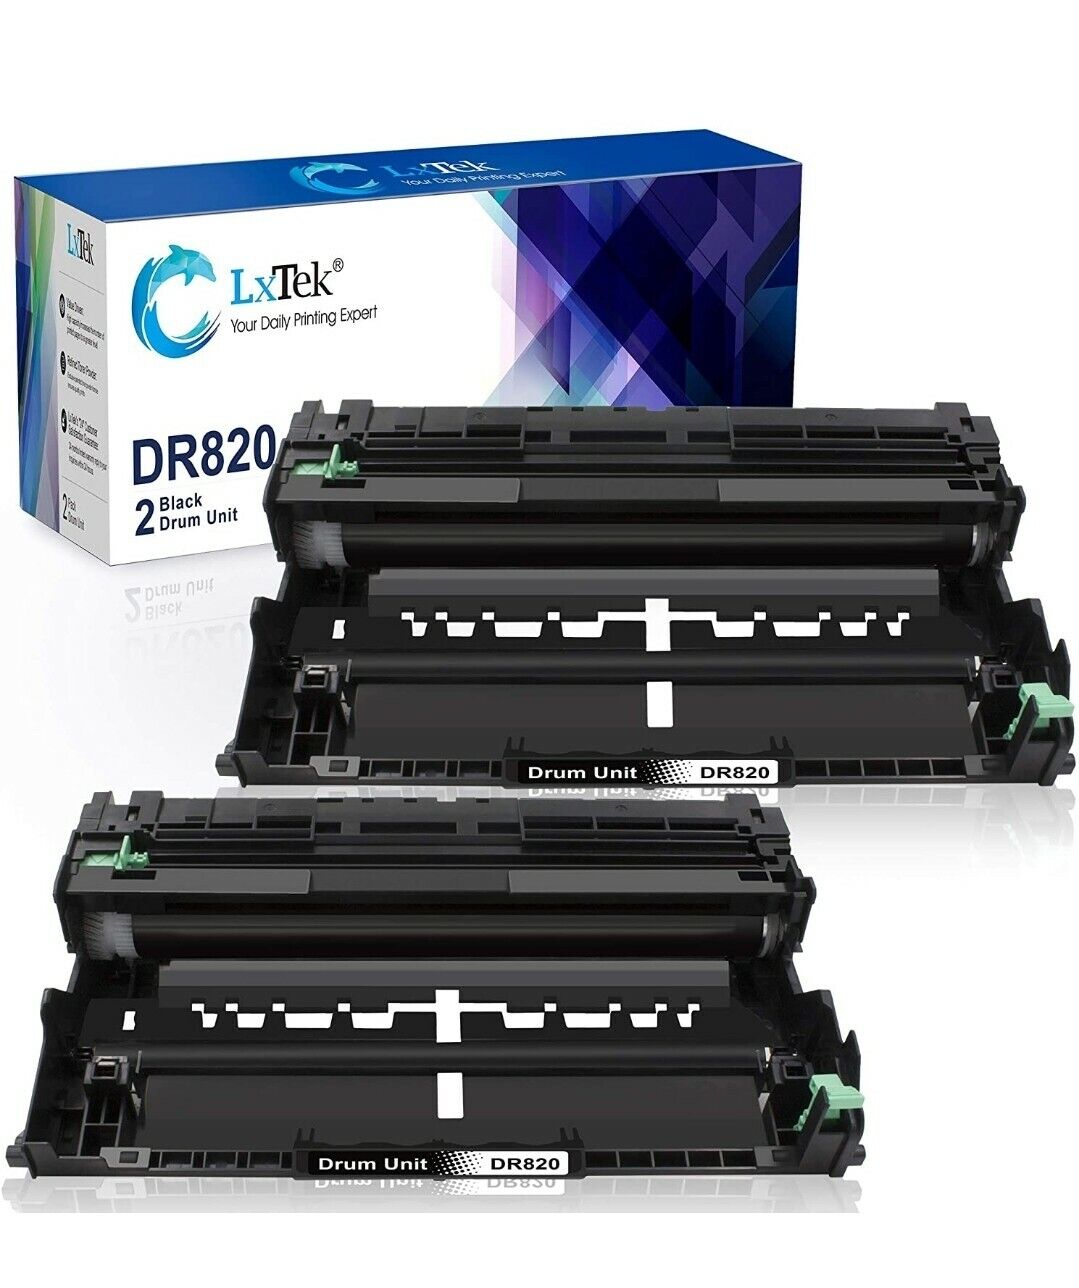 LXTEk Compatible Drum Unit Replacement for Brother DR820 DR-820